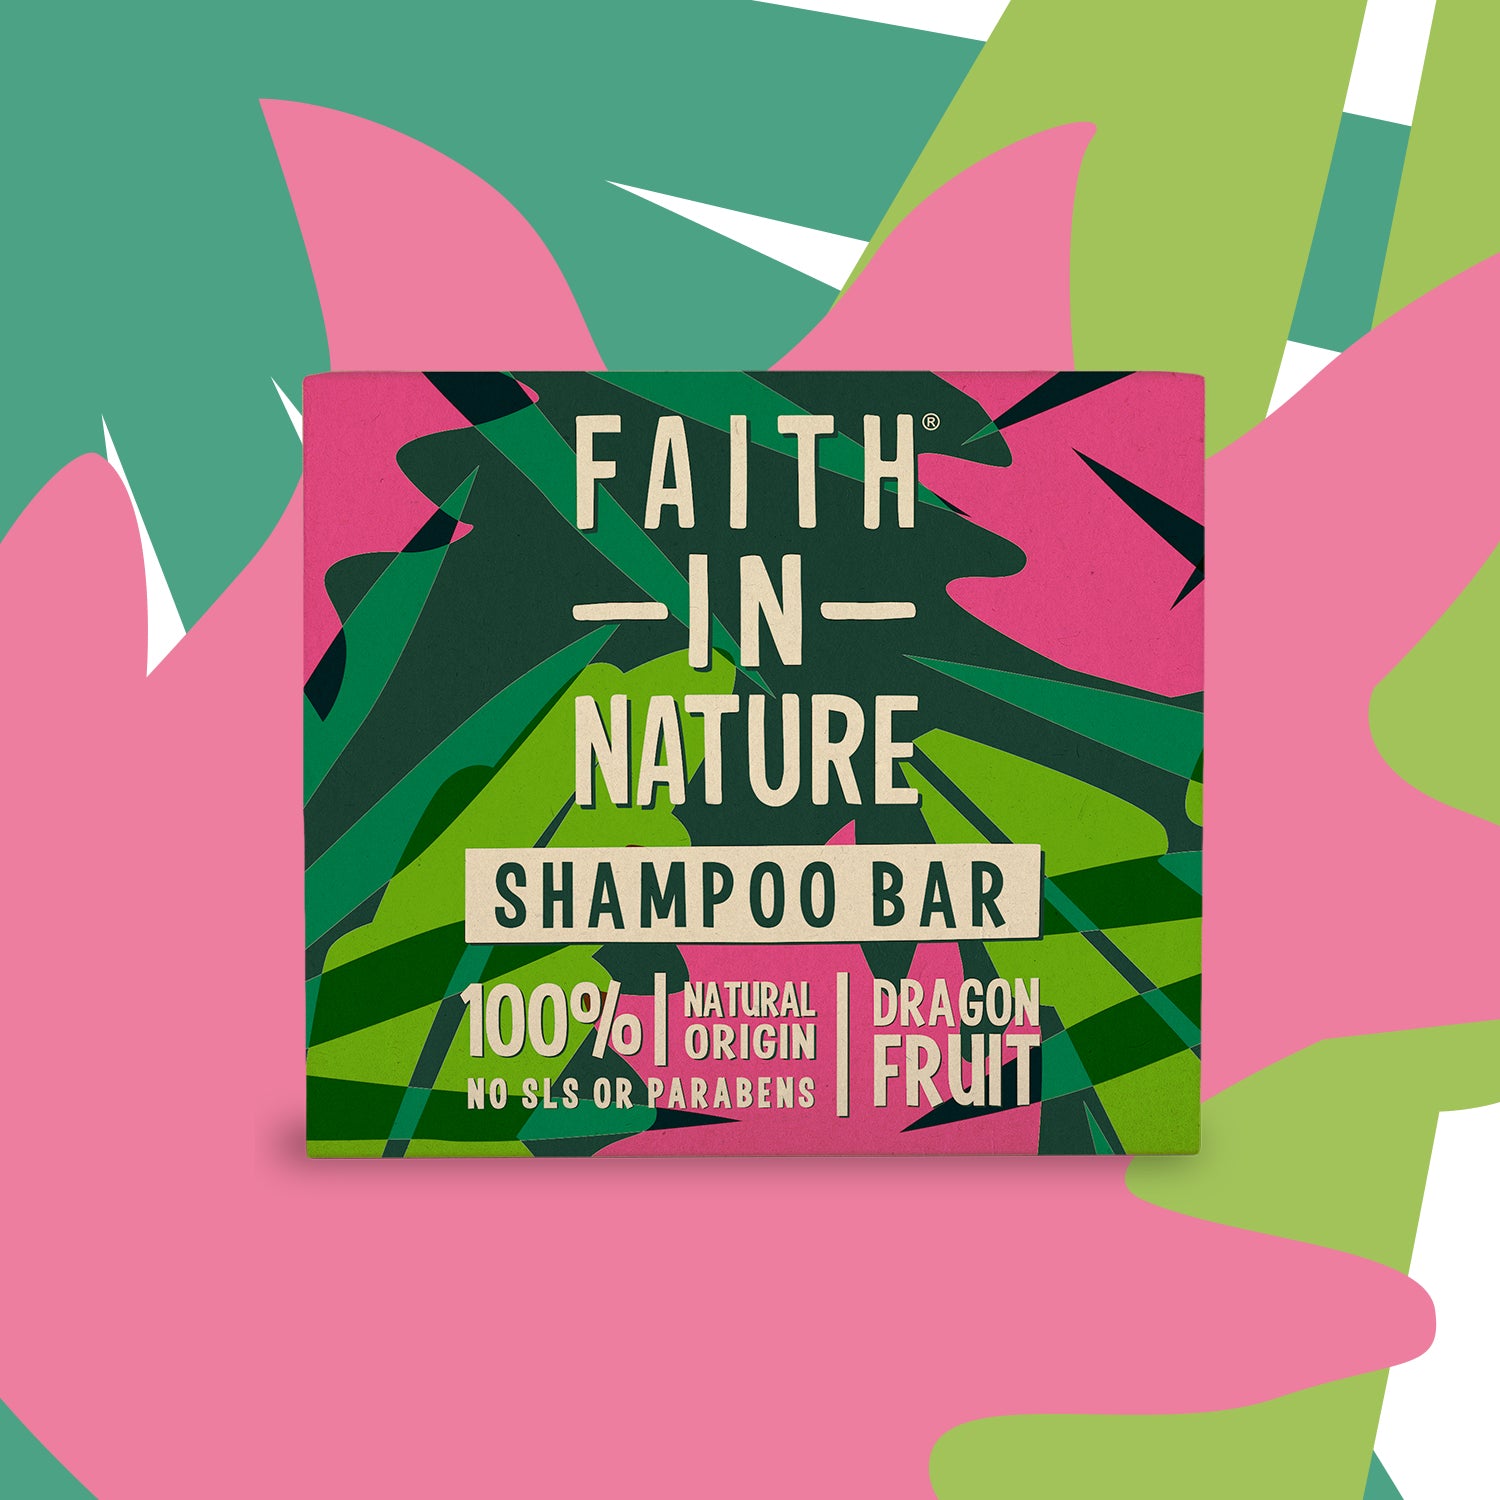 Faith in Nature Shampoo Bar 85g - Dragon Fruit